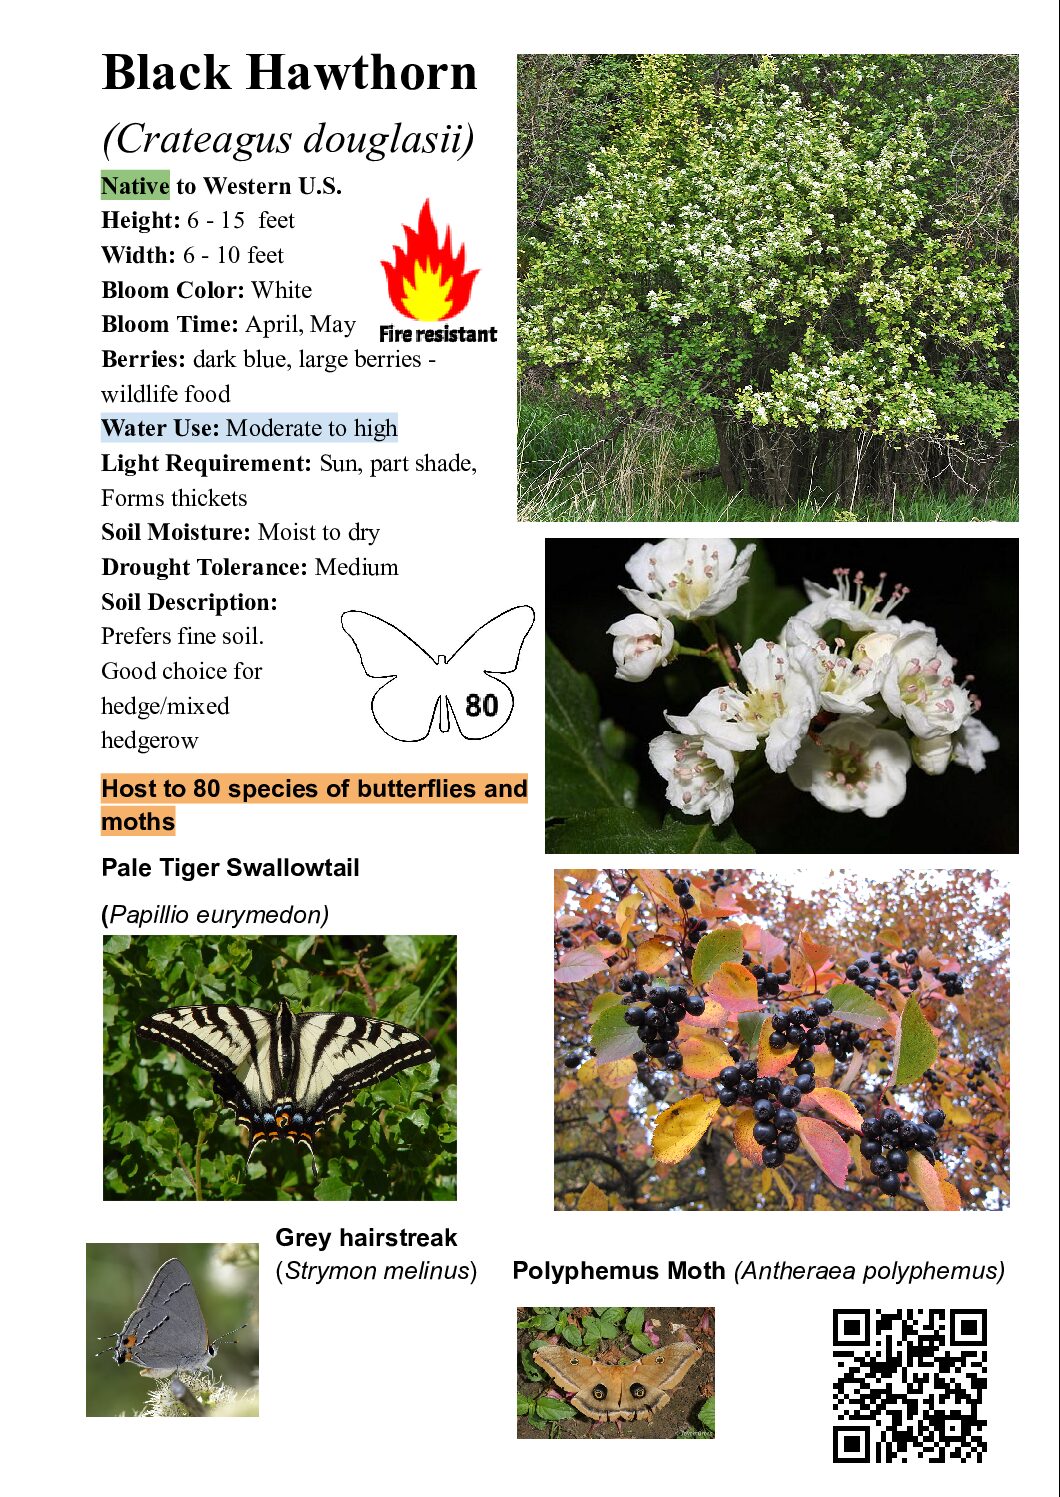 Crateagus douglasii - Black Hawthorn